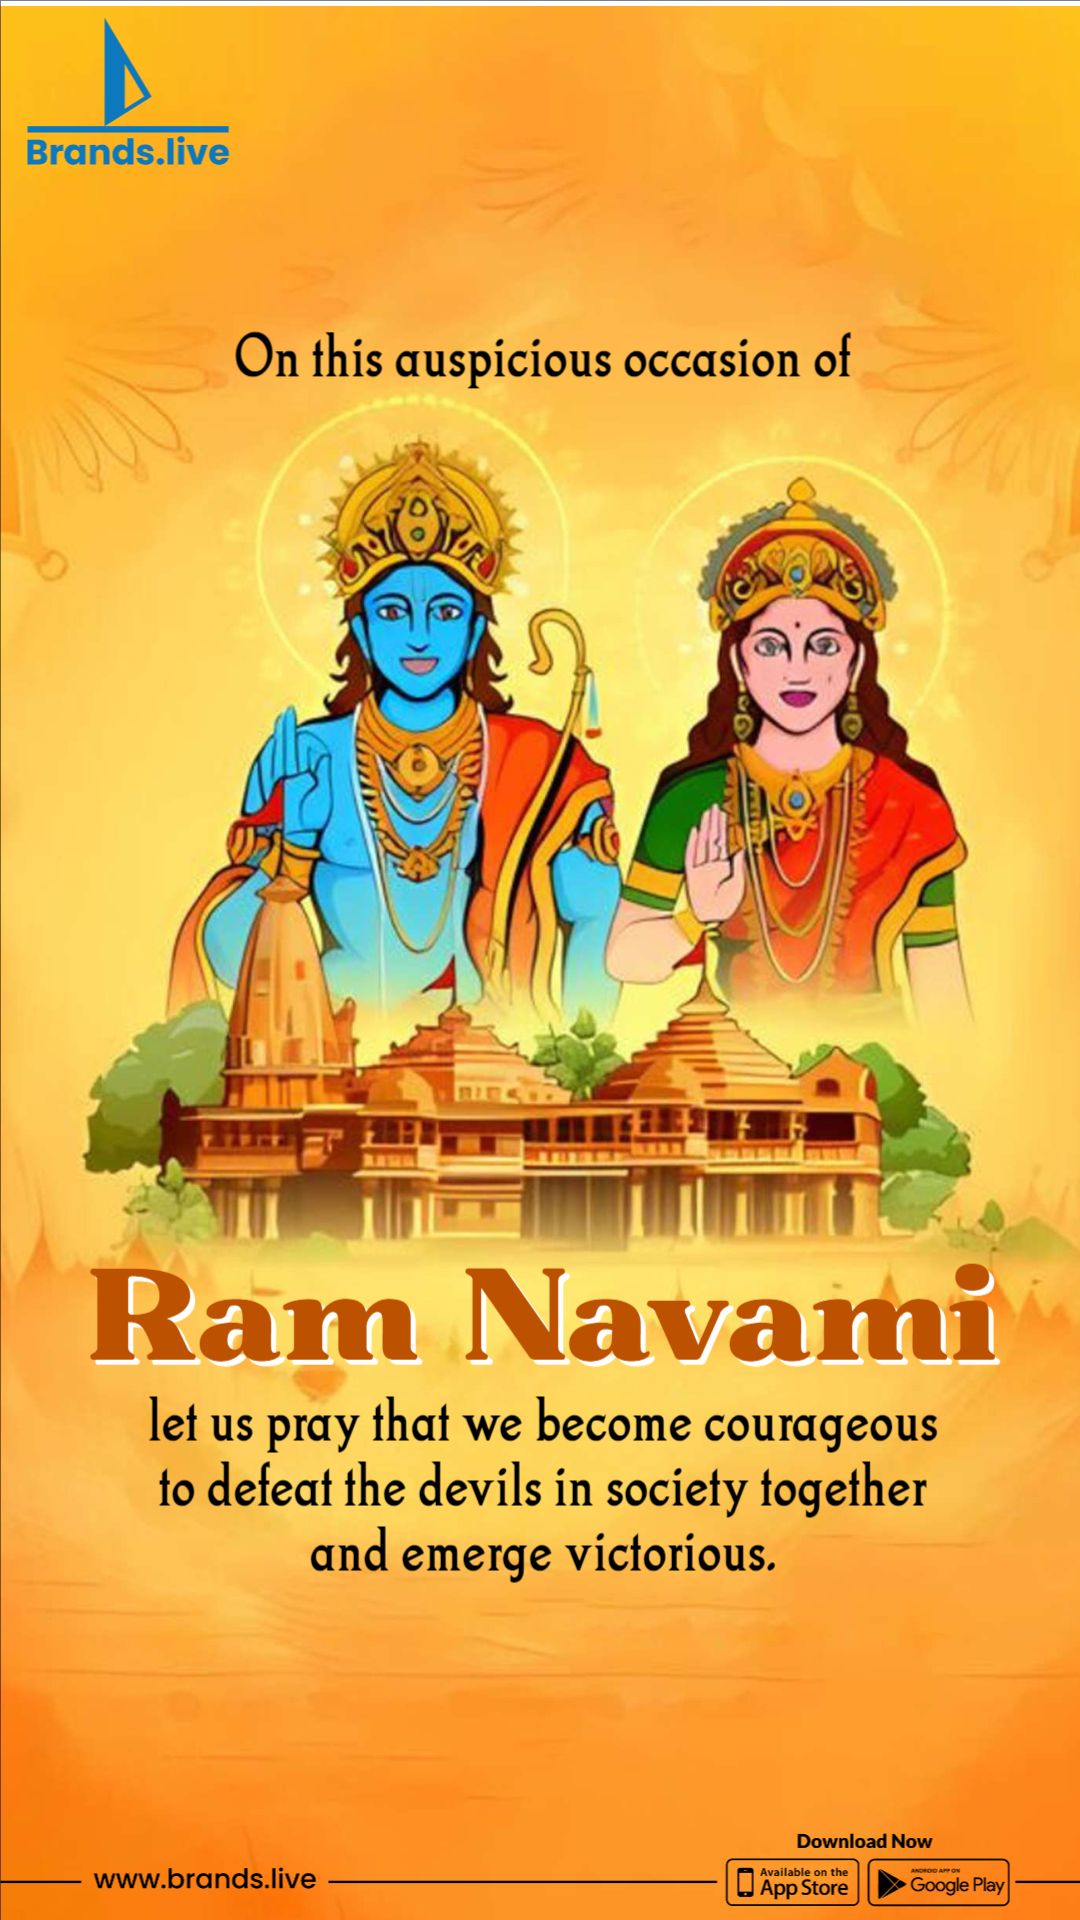 Ram Navami Poster Brands.live